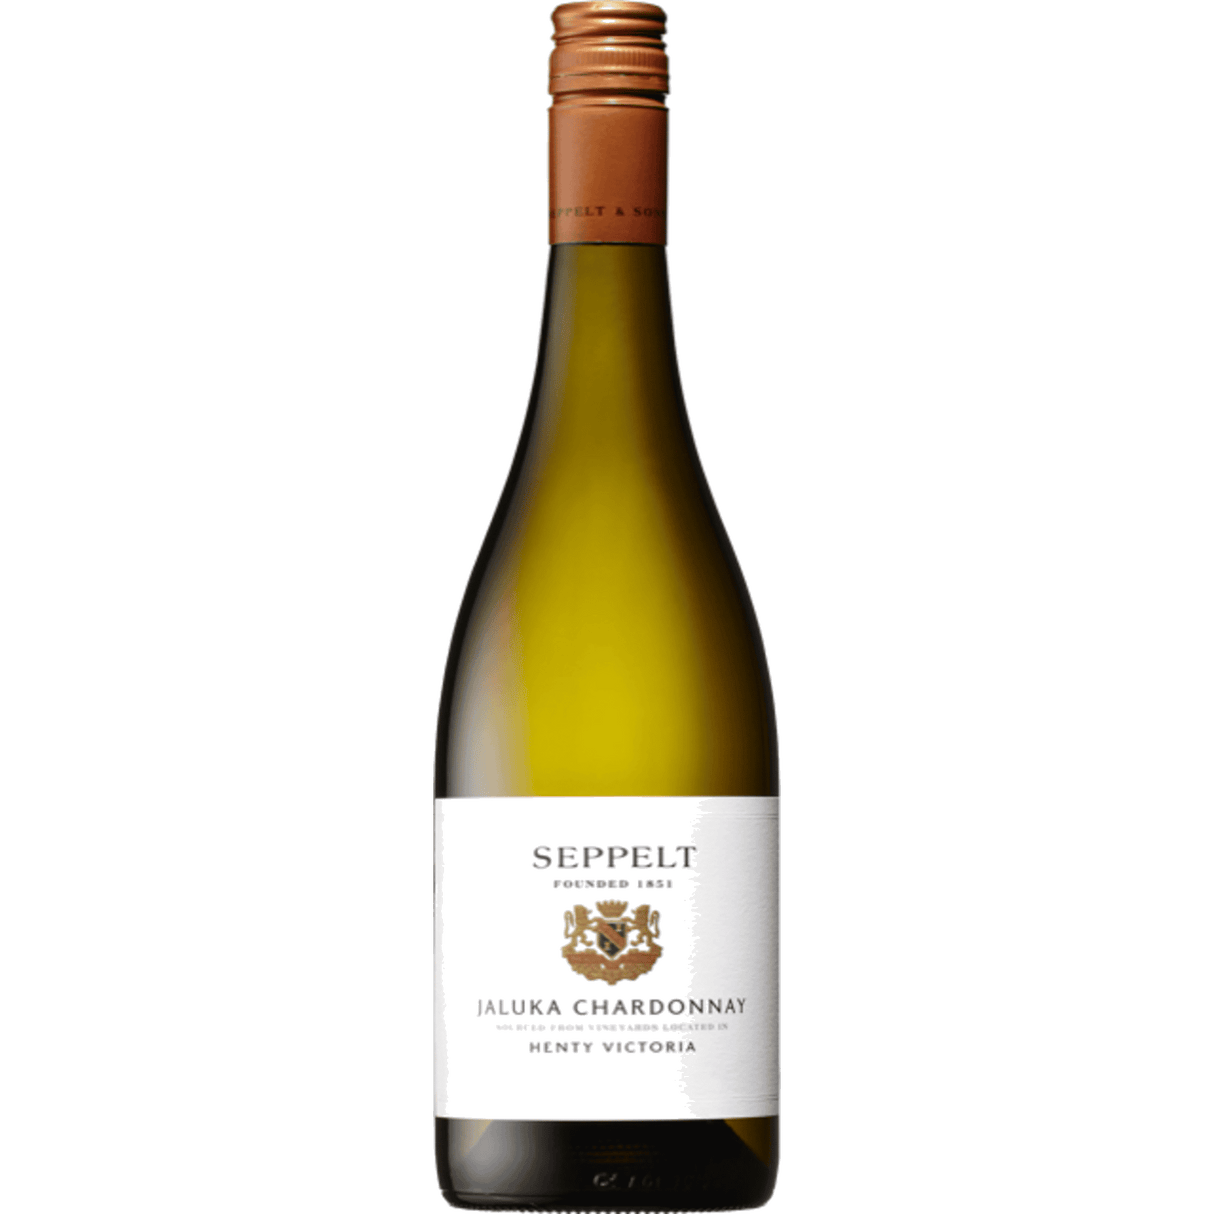 Seppelt Jaluka Chardonnay 750ml